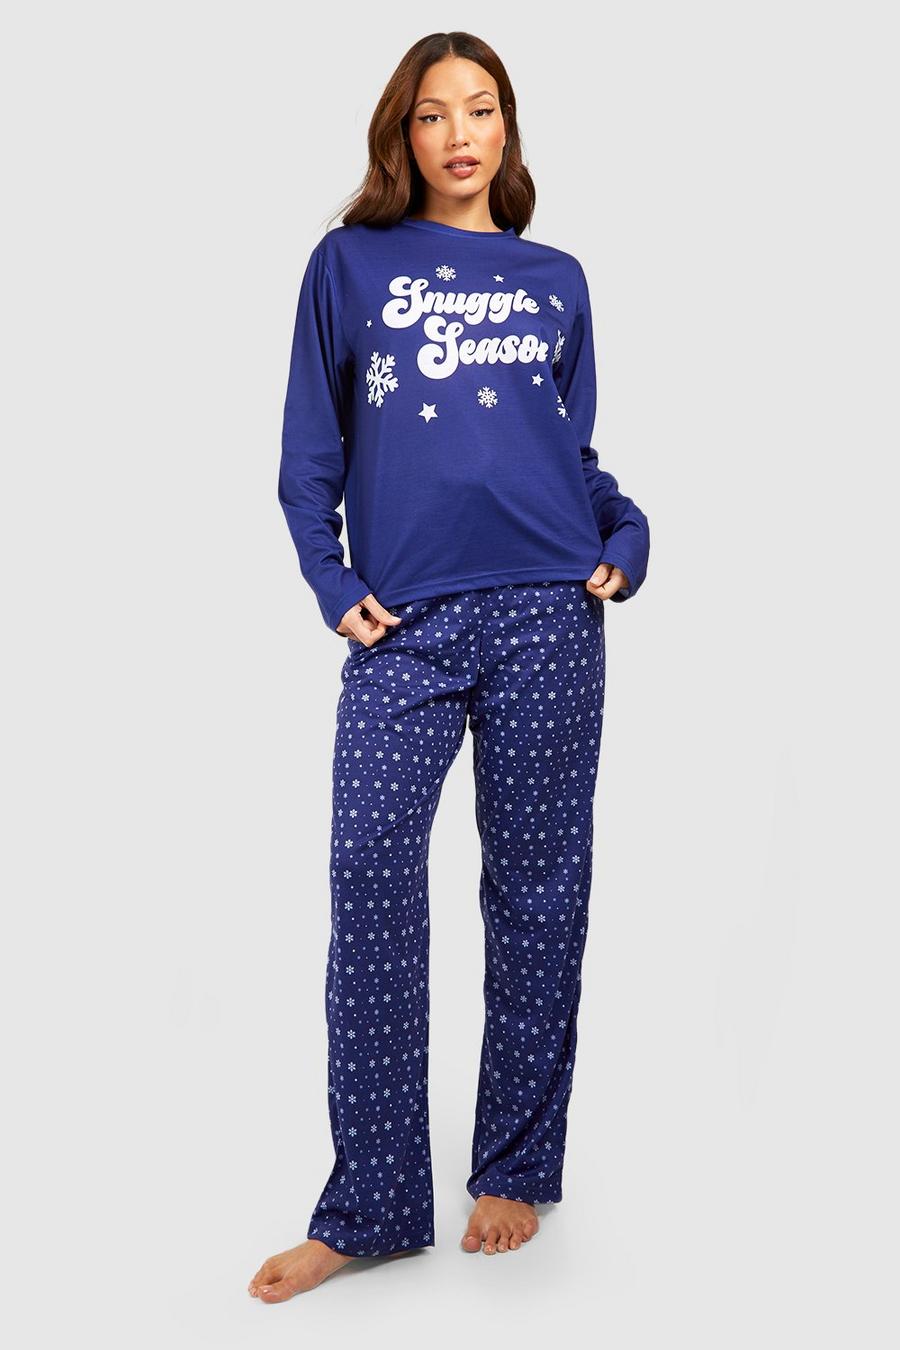 HSMQHJWE Tall Lounge Pants Comfy Womens Pajamas Women Pajama